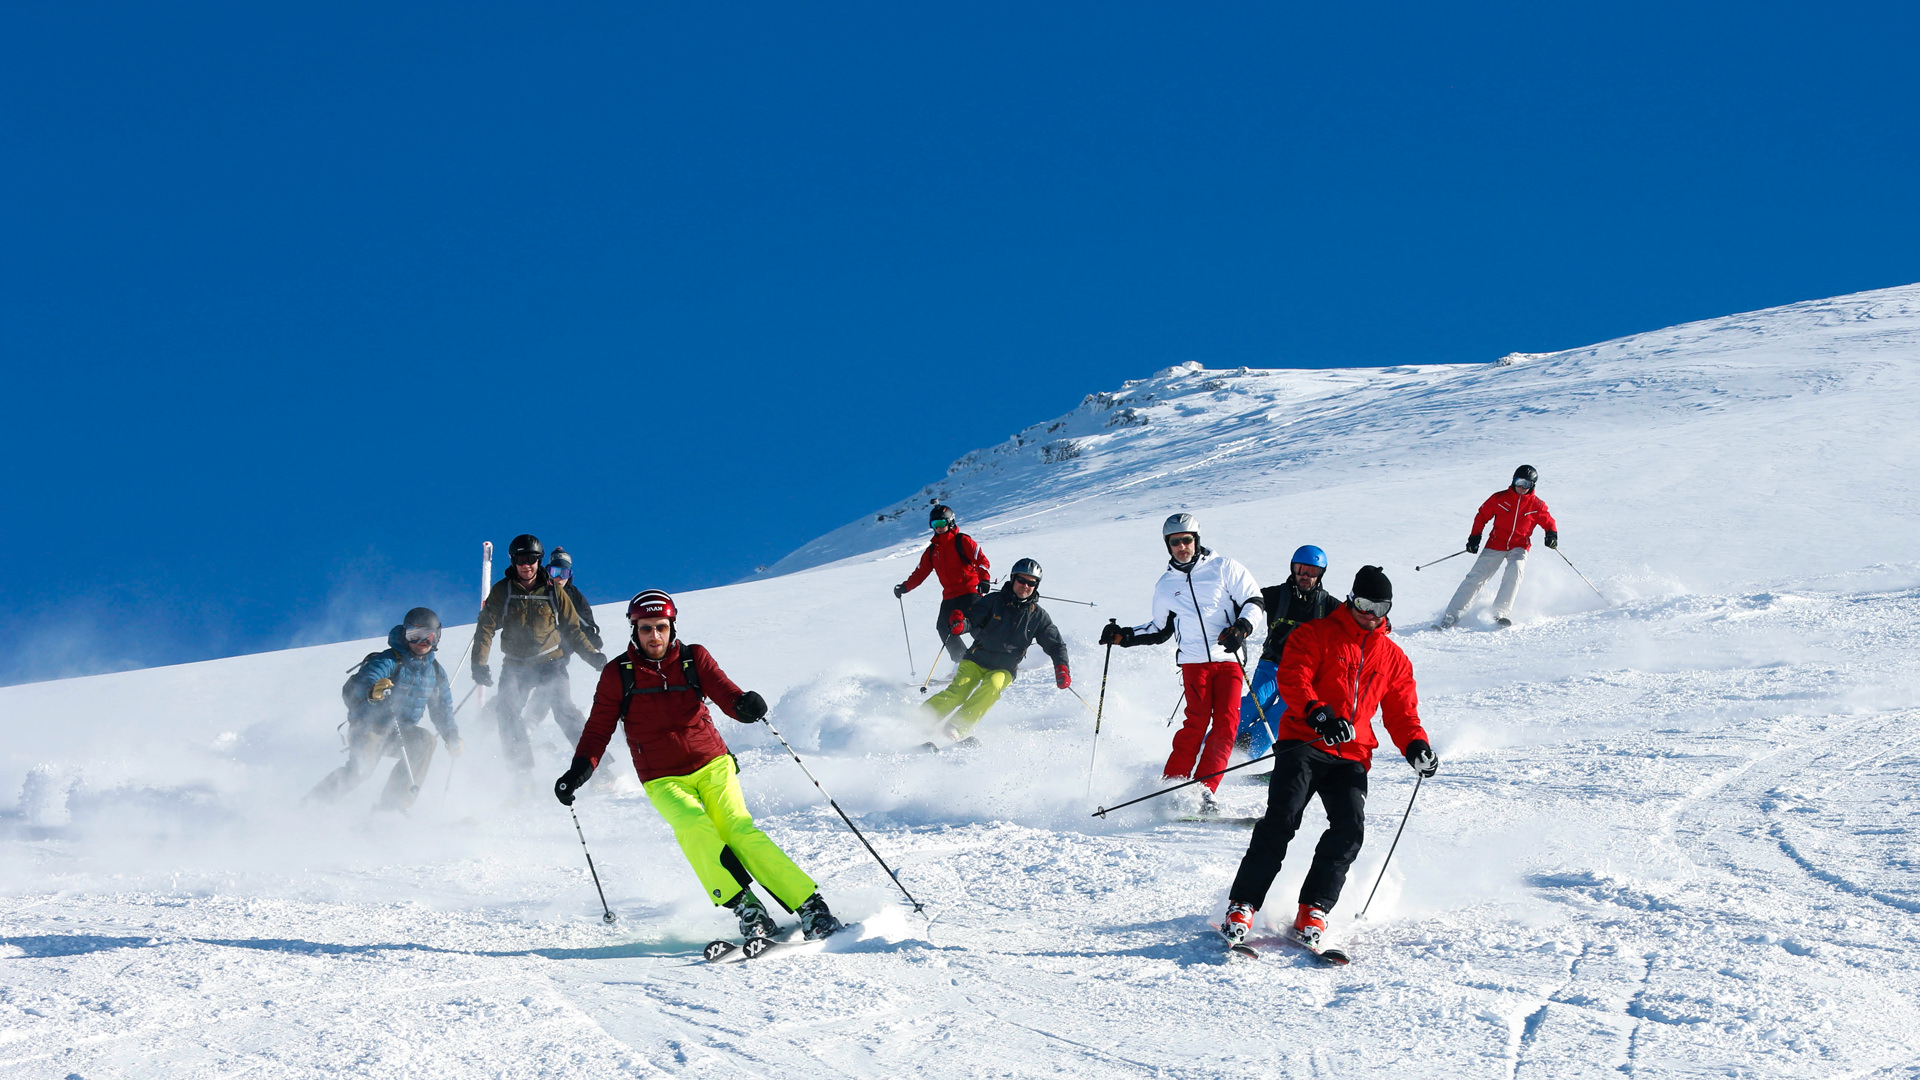 Arosa skiers